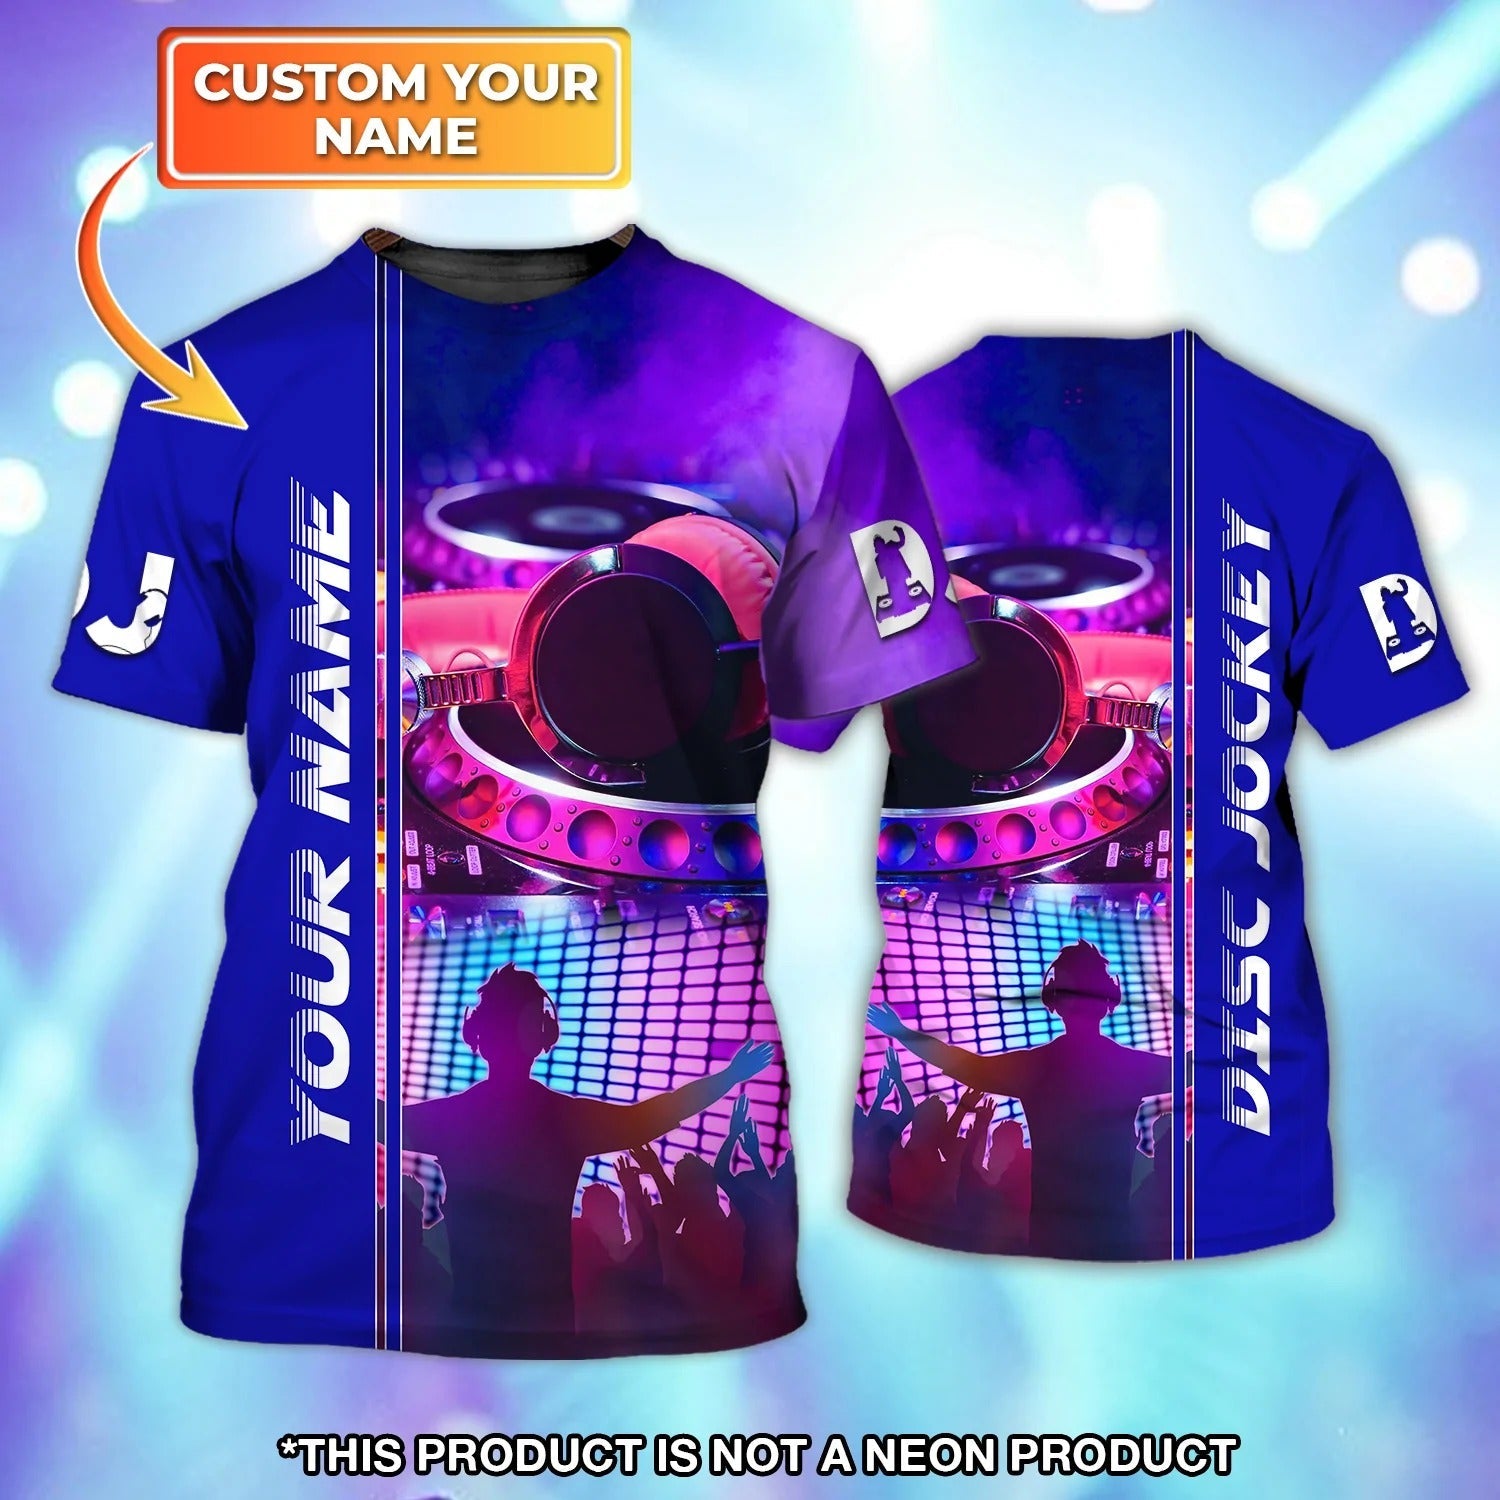 Custom With Name Disc Jockey Shirt/ Unsiex DJ Tshirt/ Gift For DJ Friend/ DJ Uniform